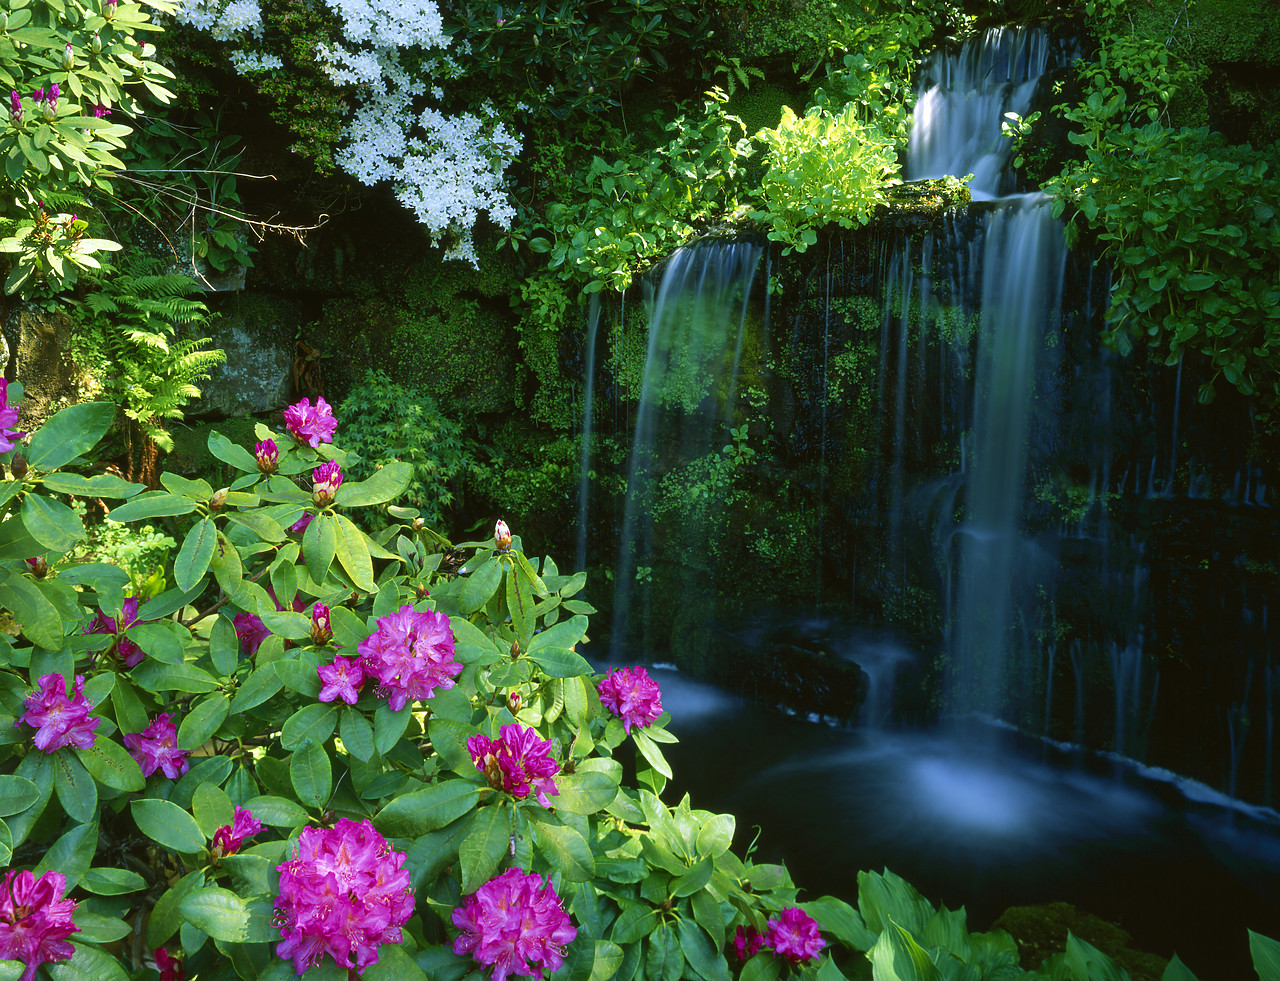 #020073-1 - Rhododendrons & Cascade, Hever Castle Gardens, Kent, England